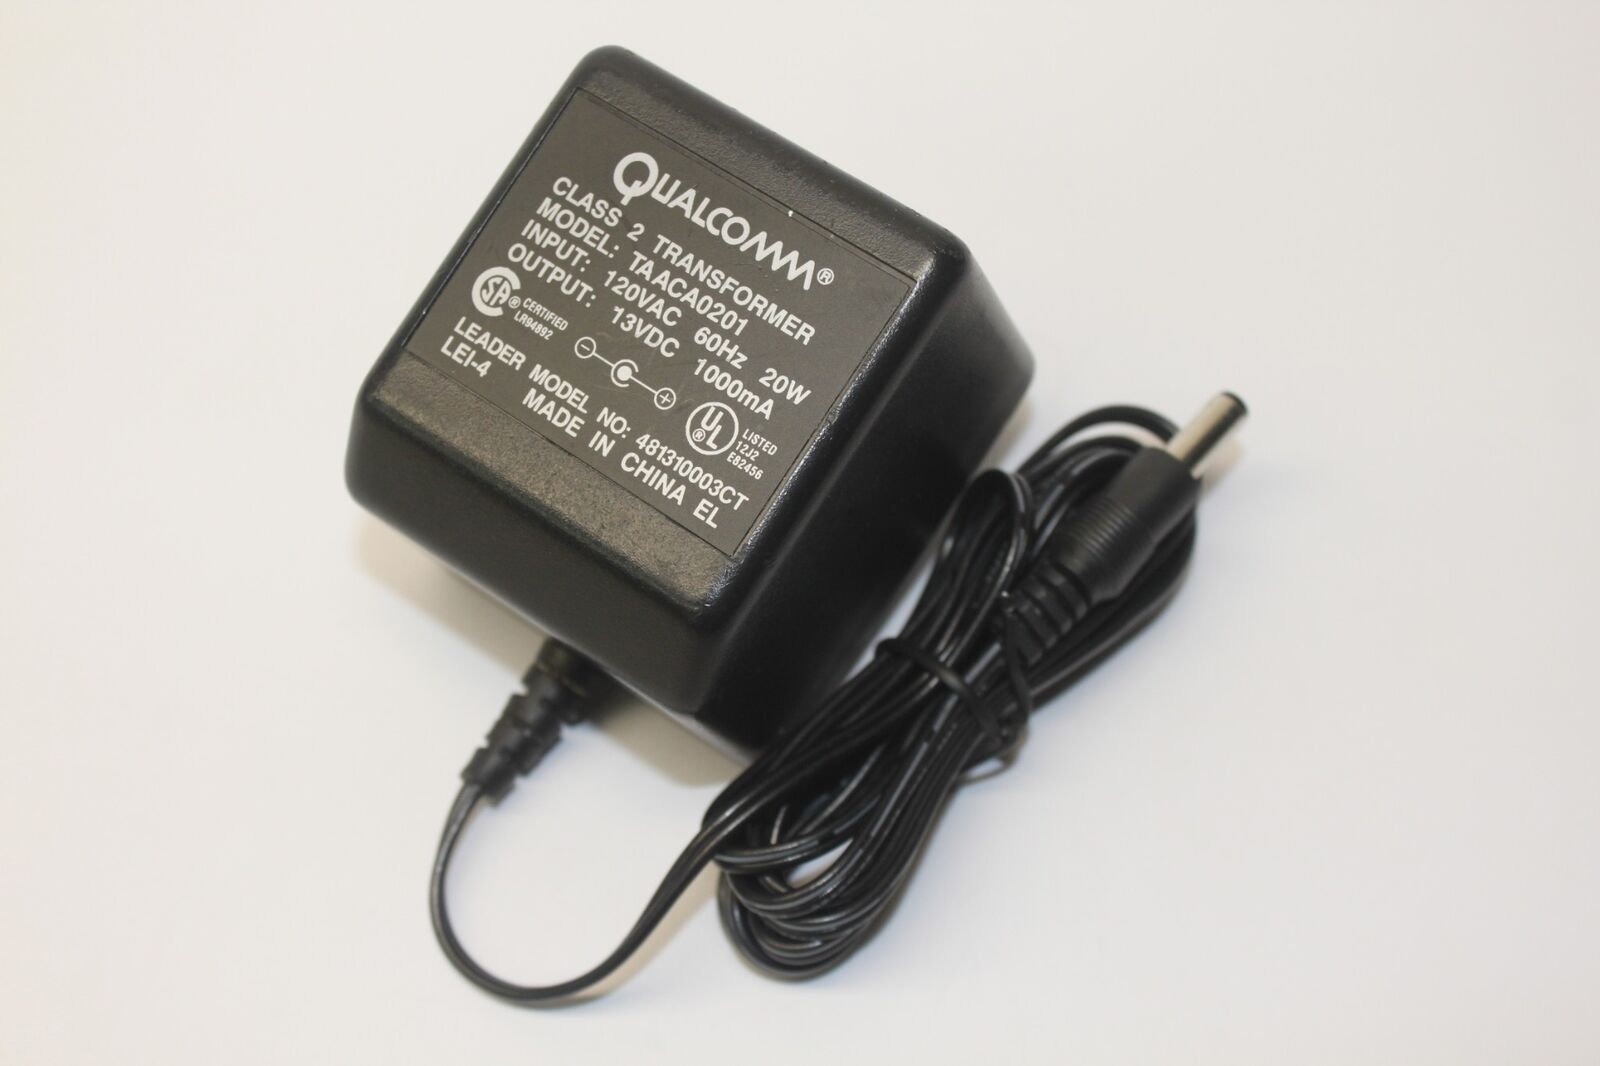 Genuine Qualcomm TA ACA0201 AC Adapter Class 2 Transformer Output 13V 1000mA Brand: Qualcomm Type: Adapter MPN: D